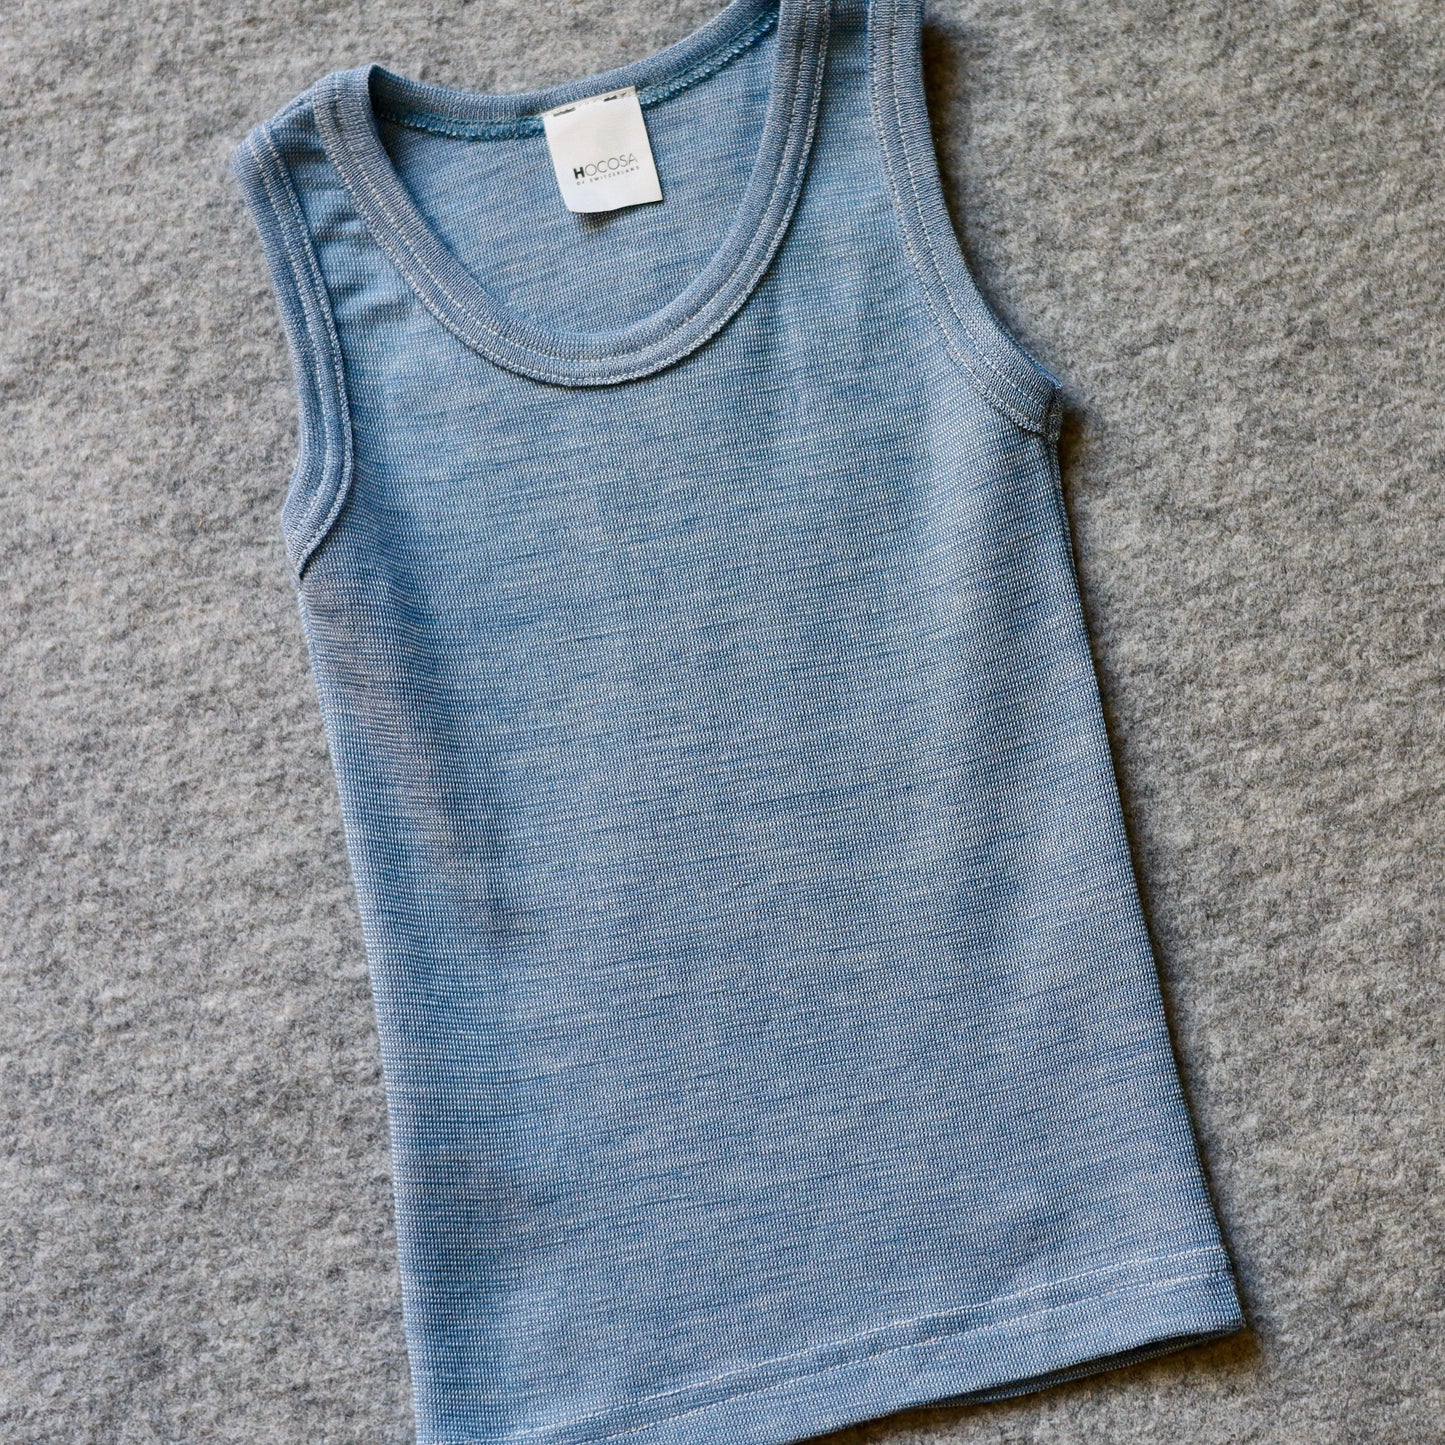 Hocosa Child Sleeveless Shirt, Wool/Silk, Sea Blue